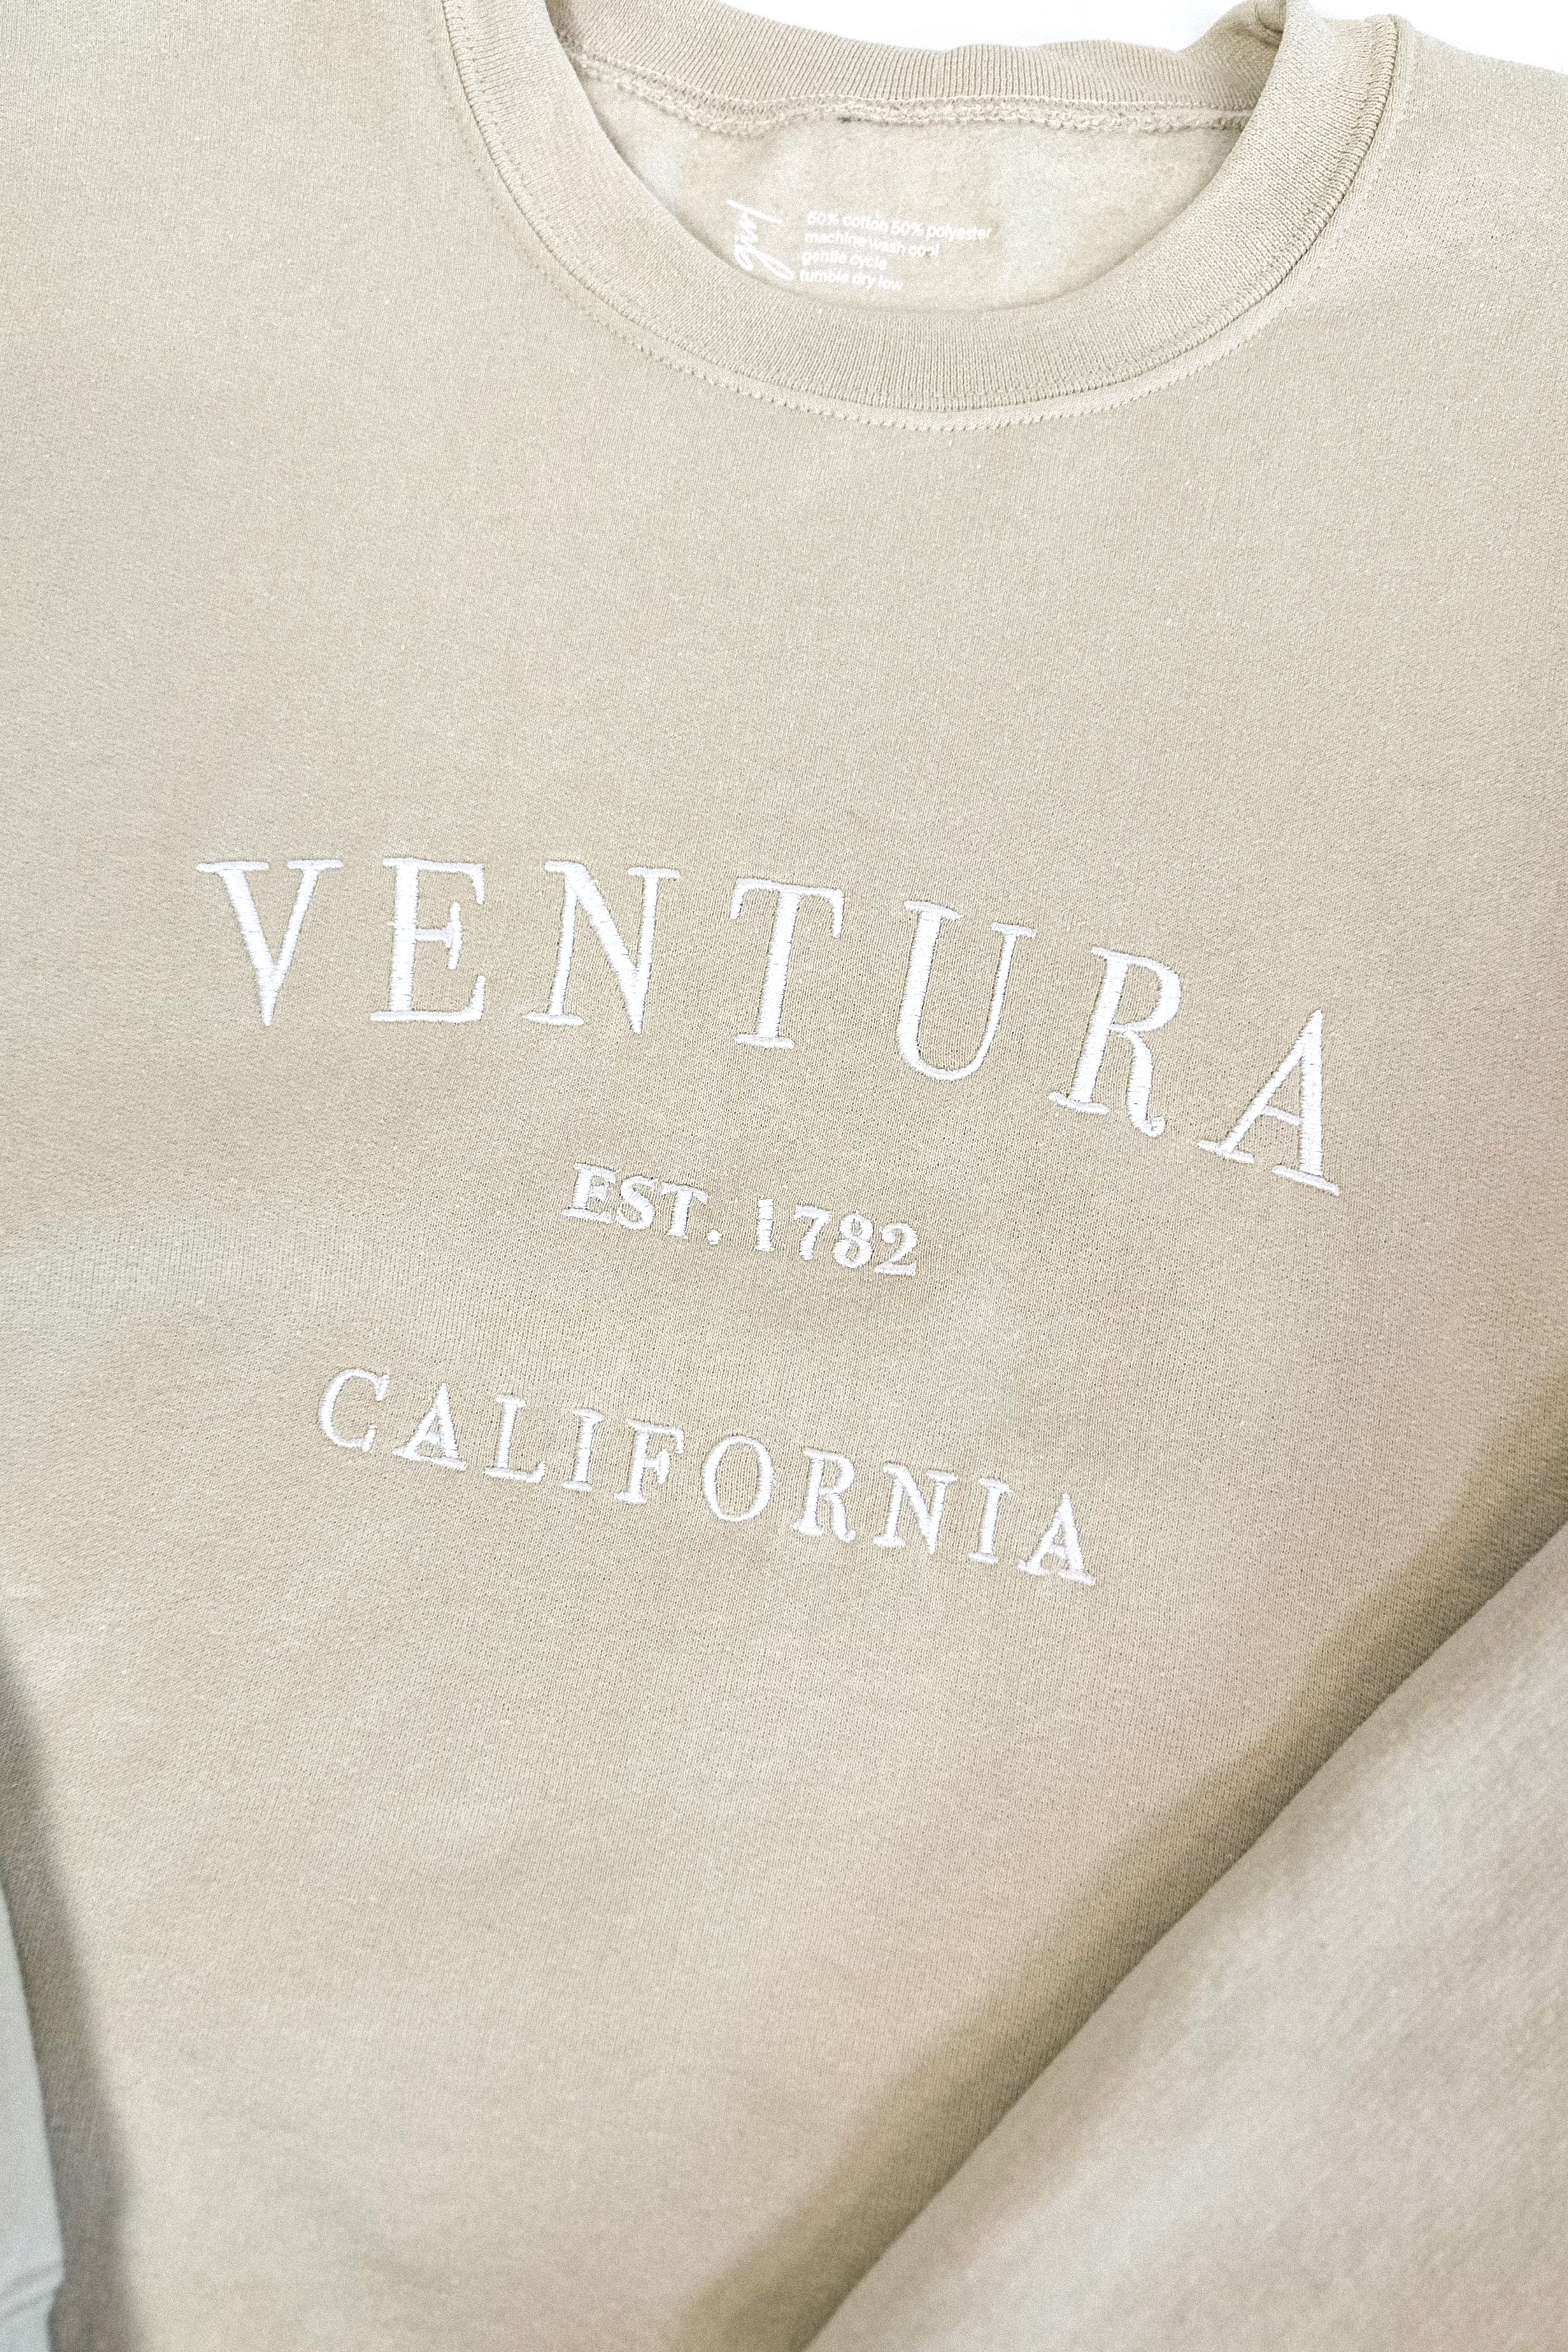 Ventura EST. 1782 Sweatshirt (Sand)